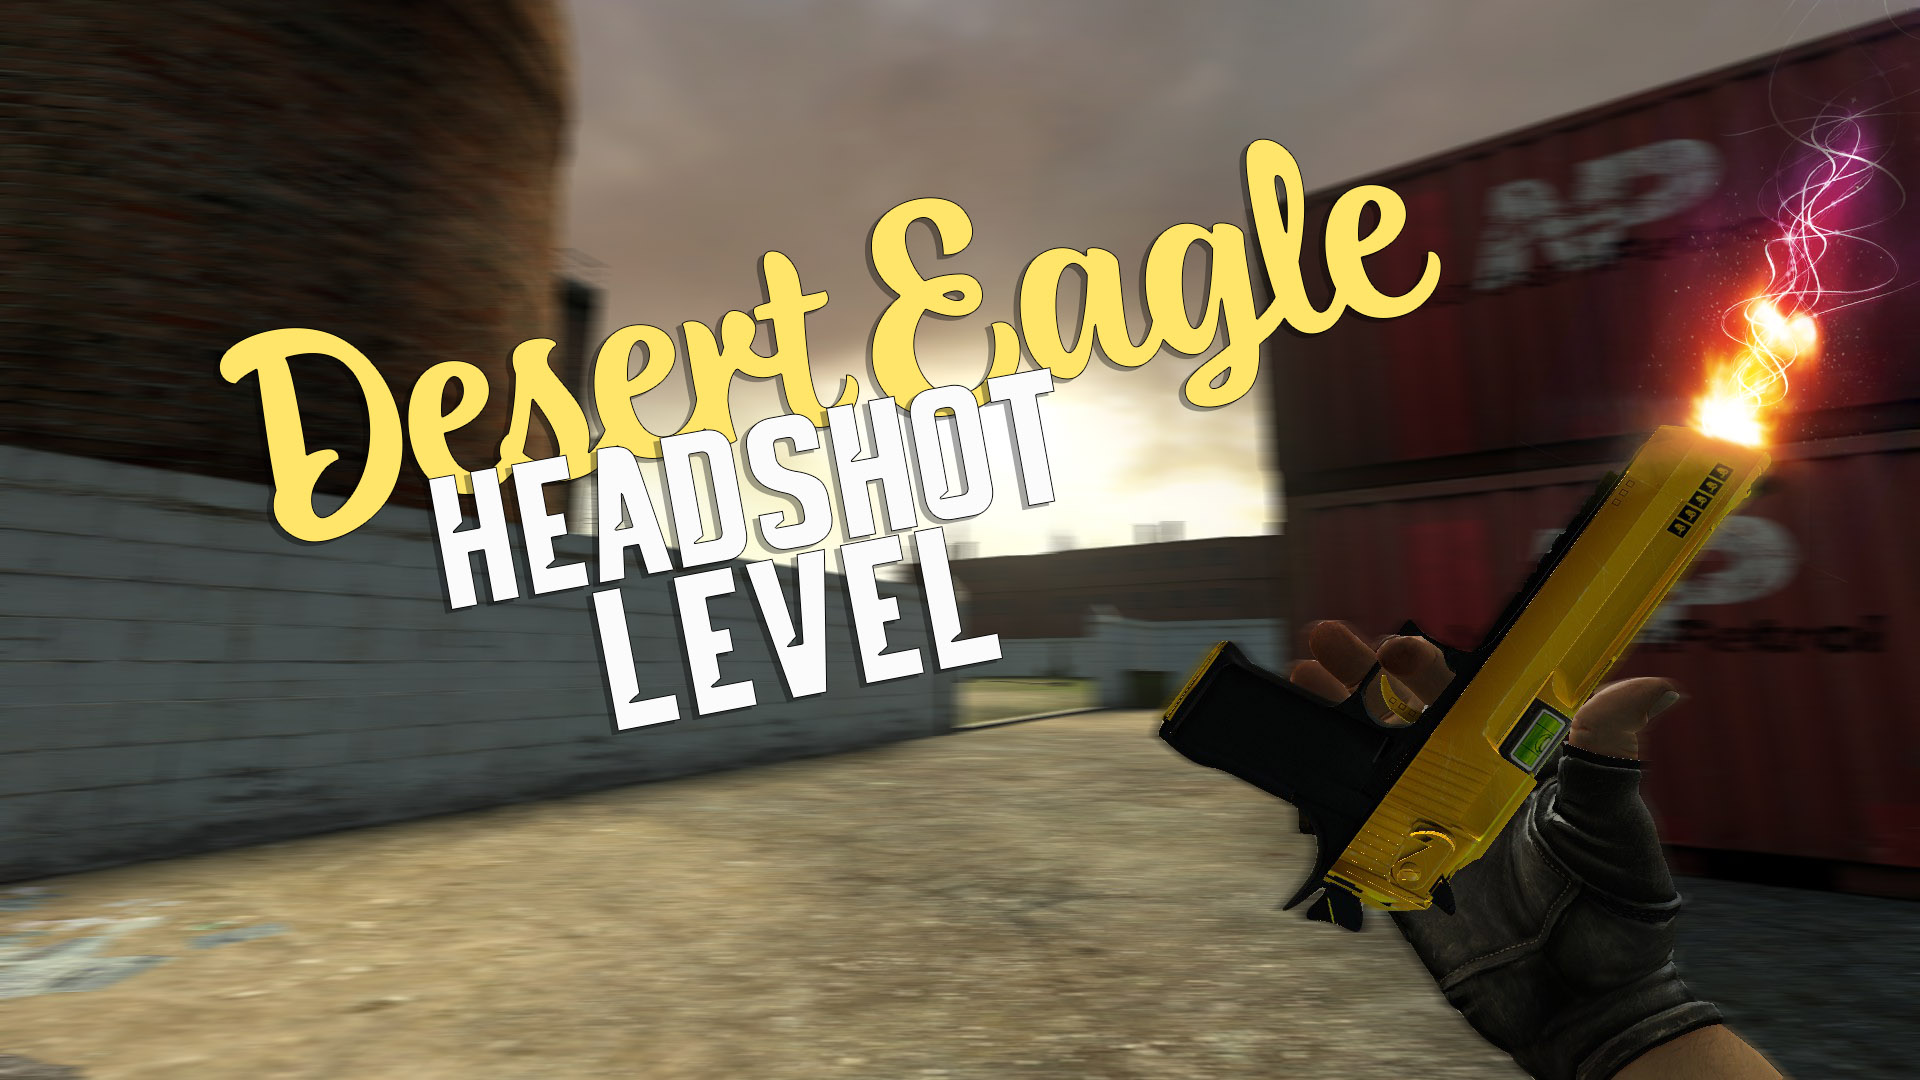 Desert Eagle | Headshot Level